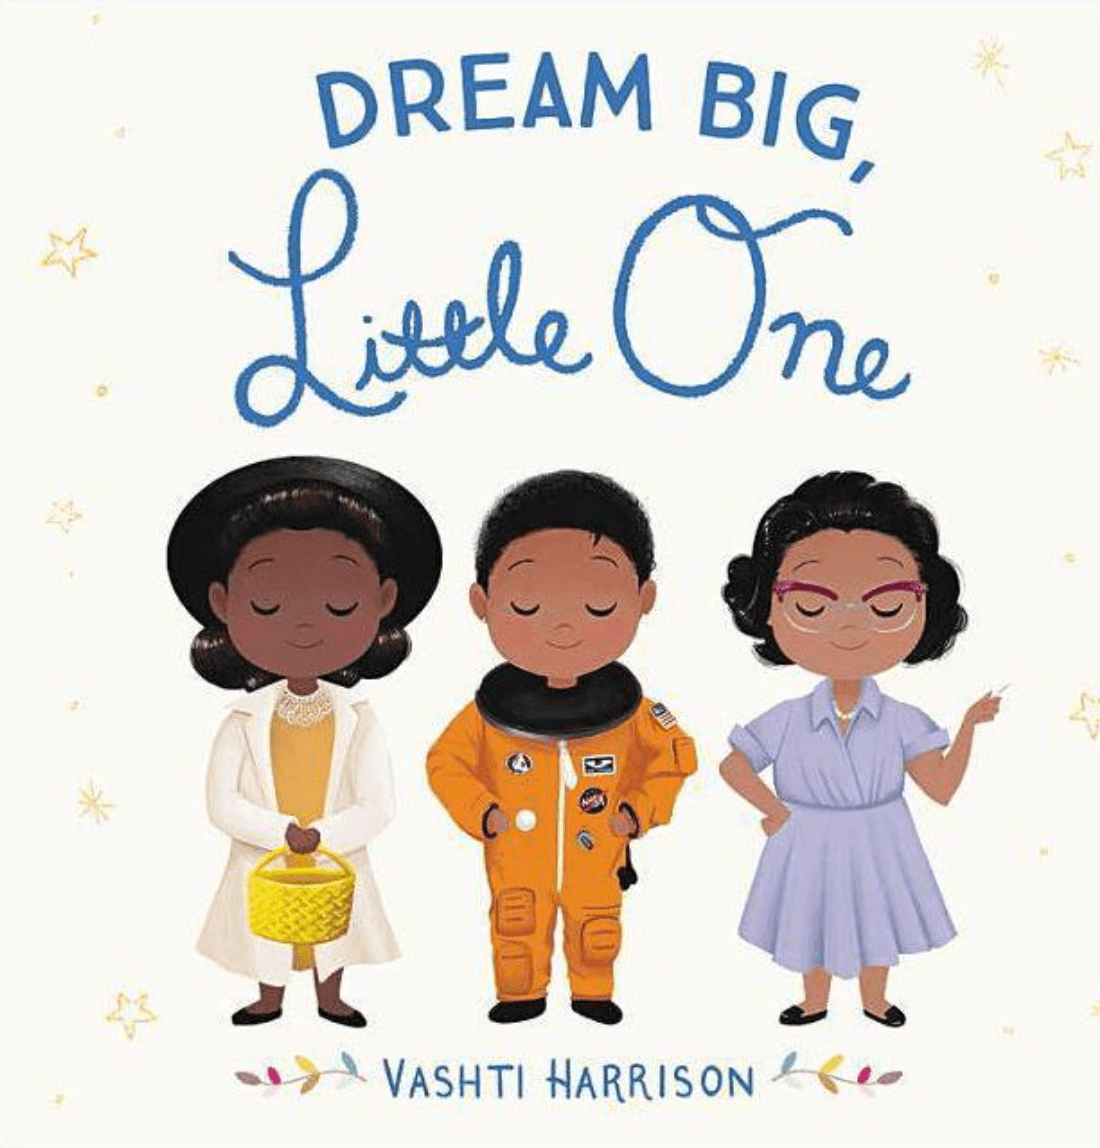 Children’s Books on Conversations on Race & Diversity